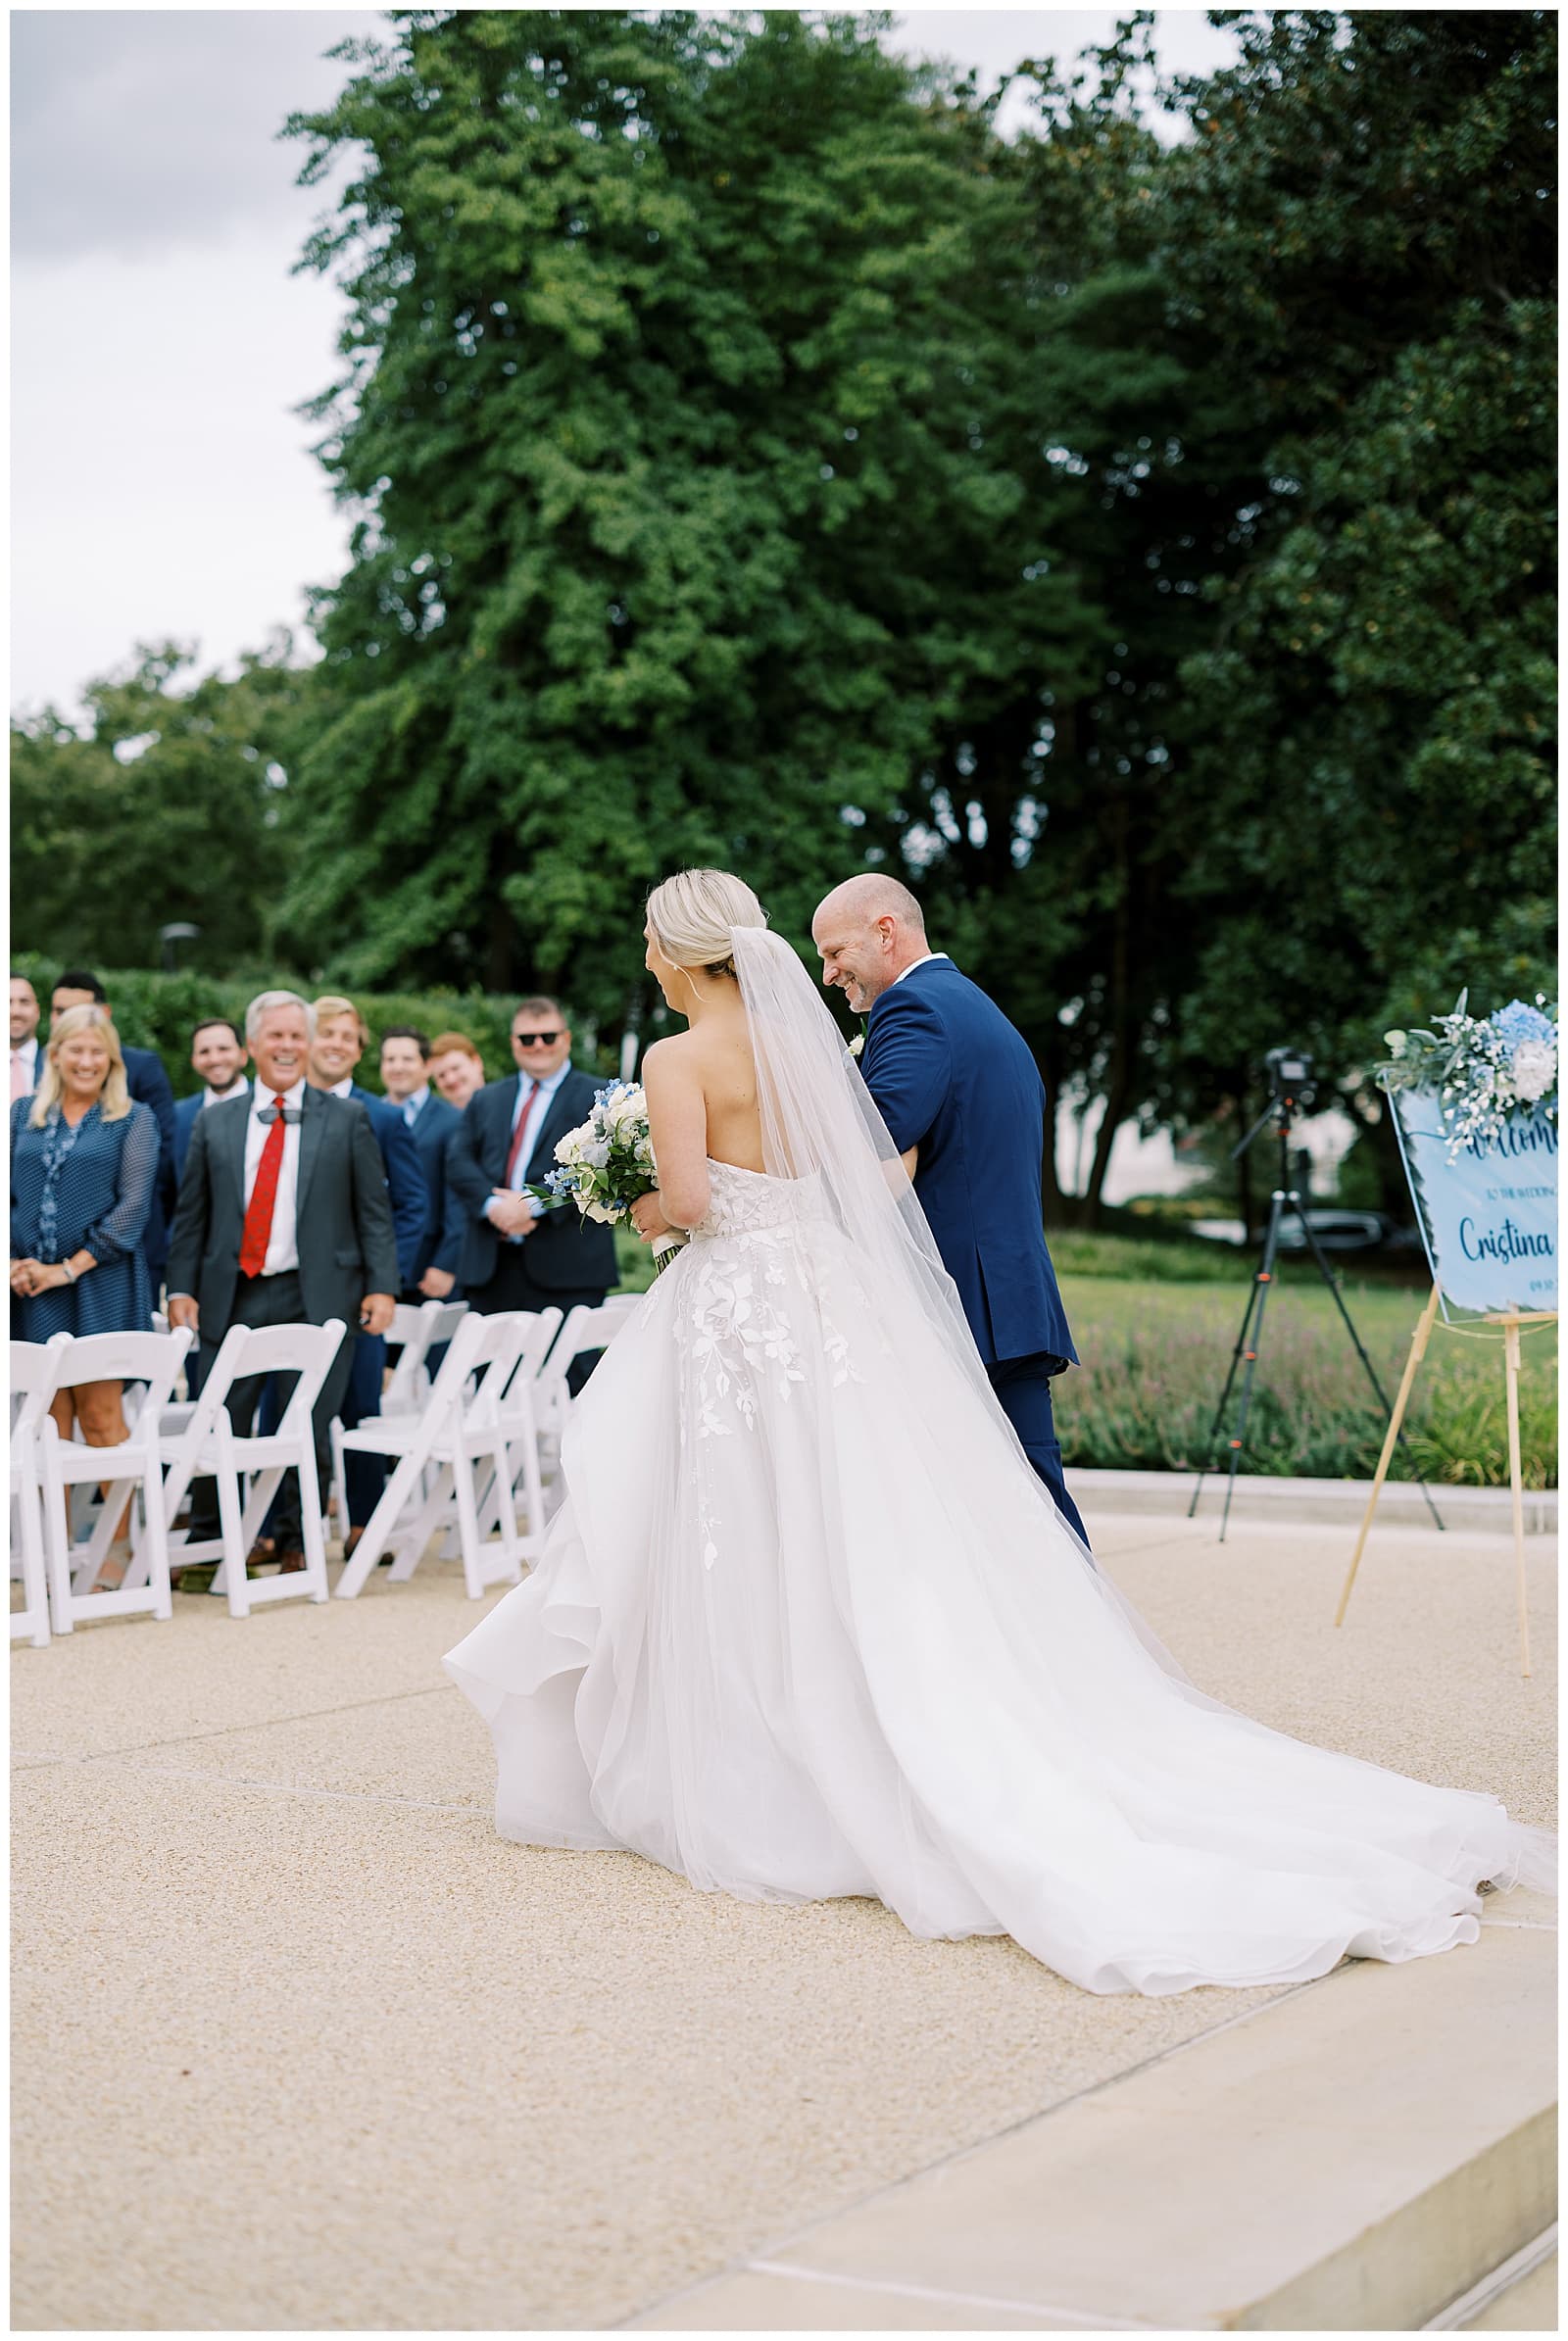 Danielle-Defayette-Photography-potomac-view-terrace-wedding-dc_0012.jpg